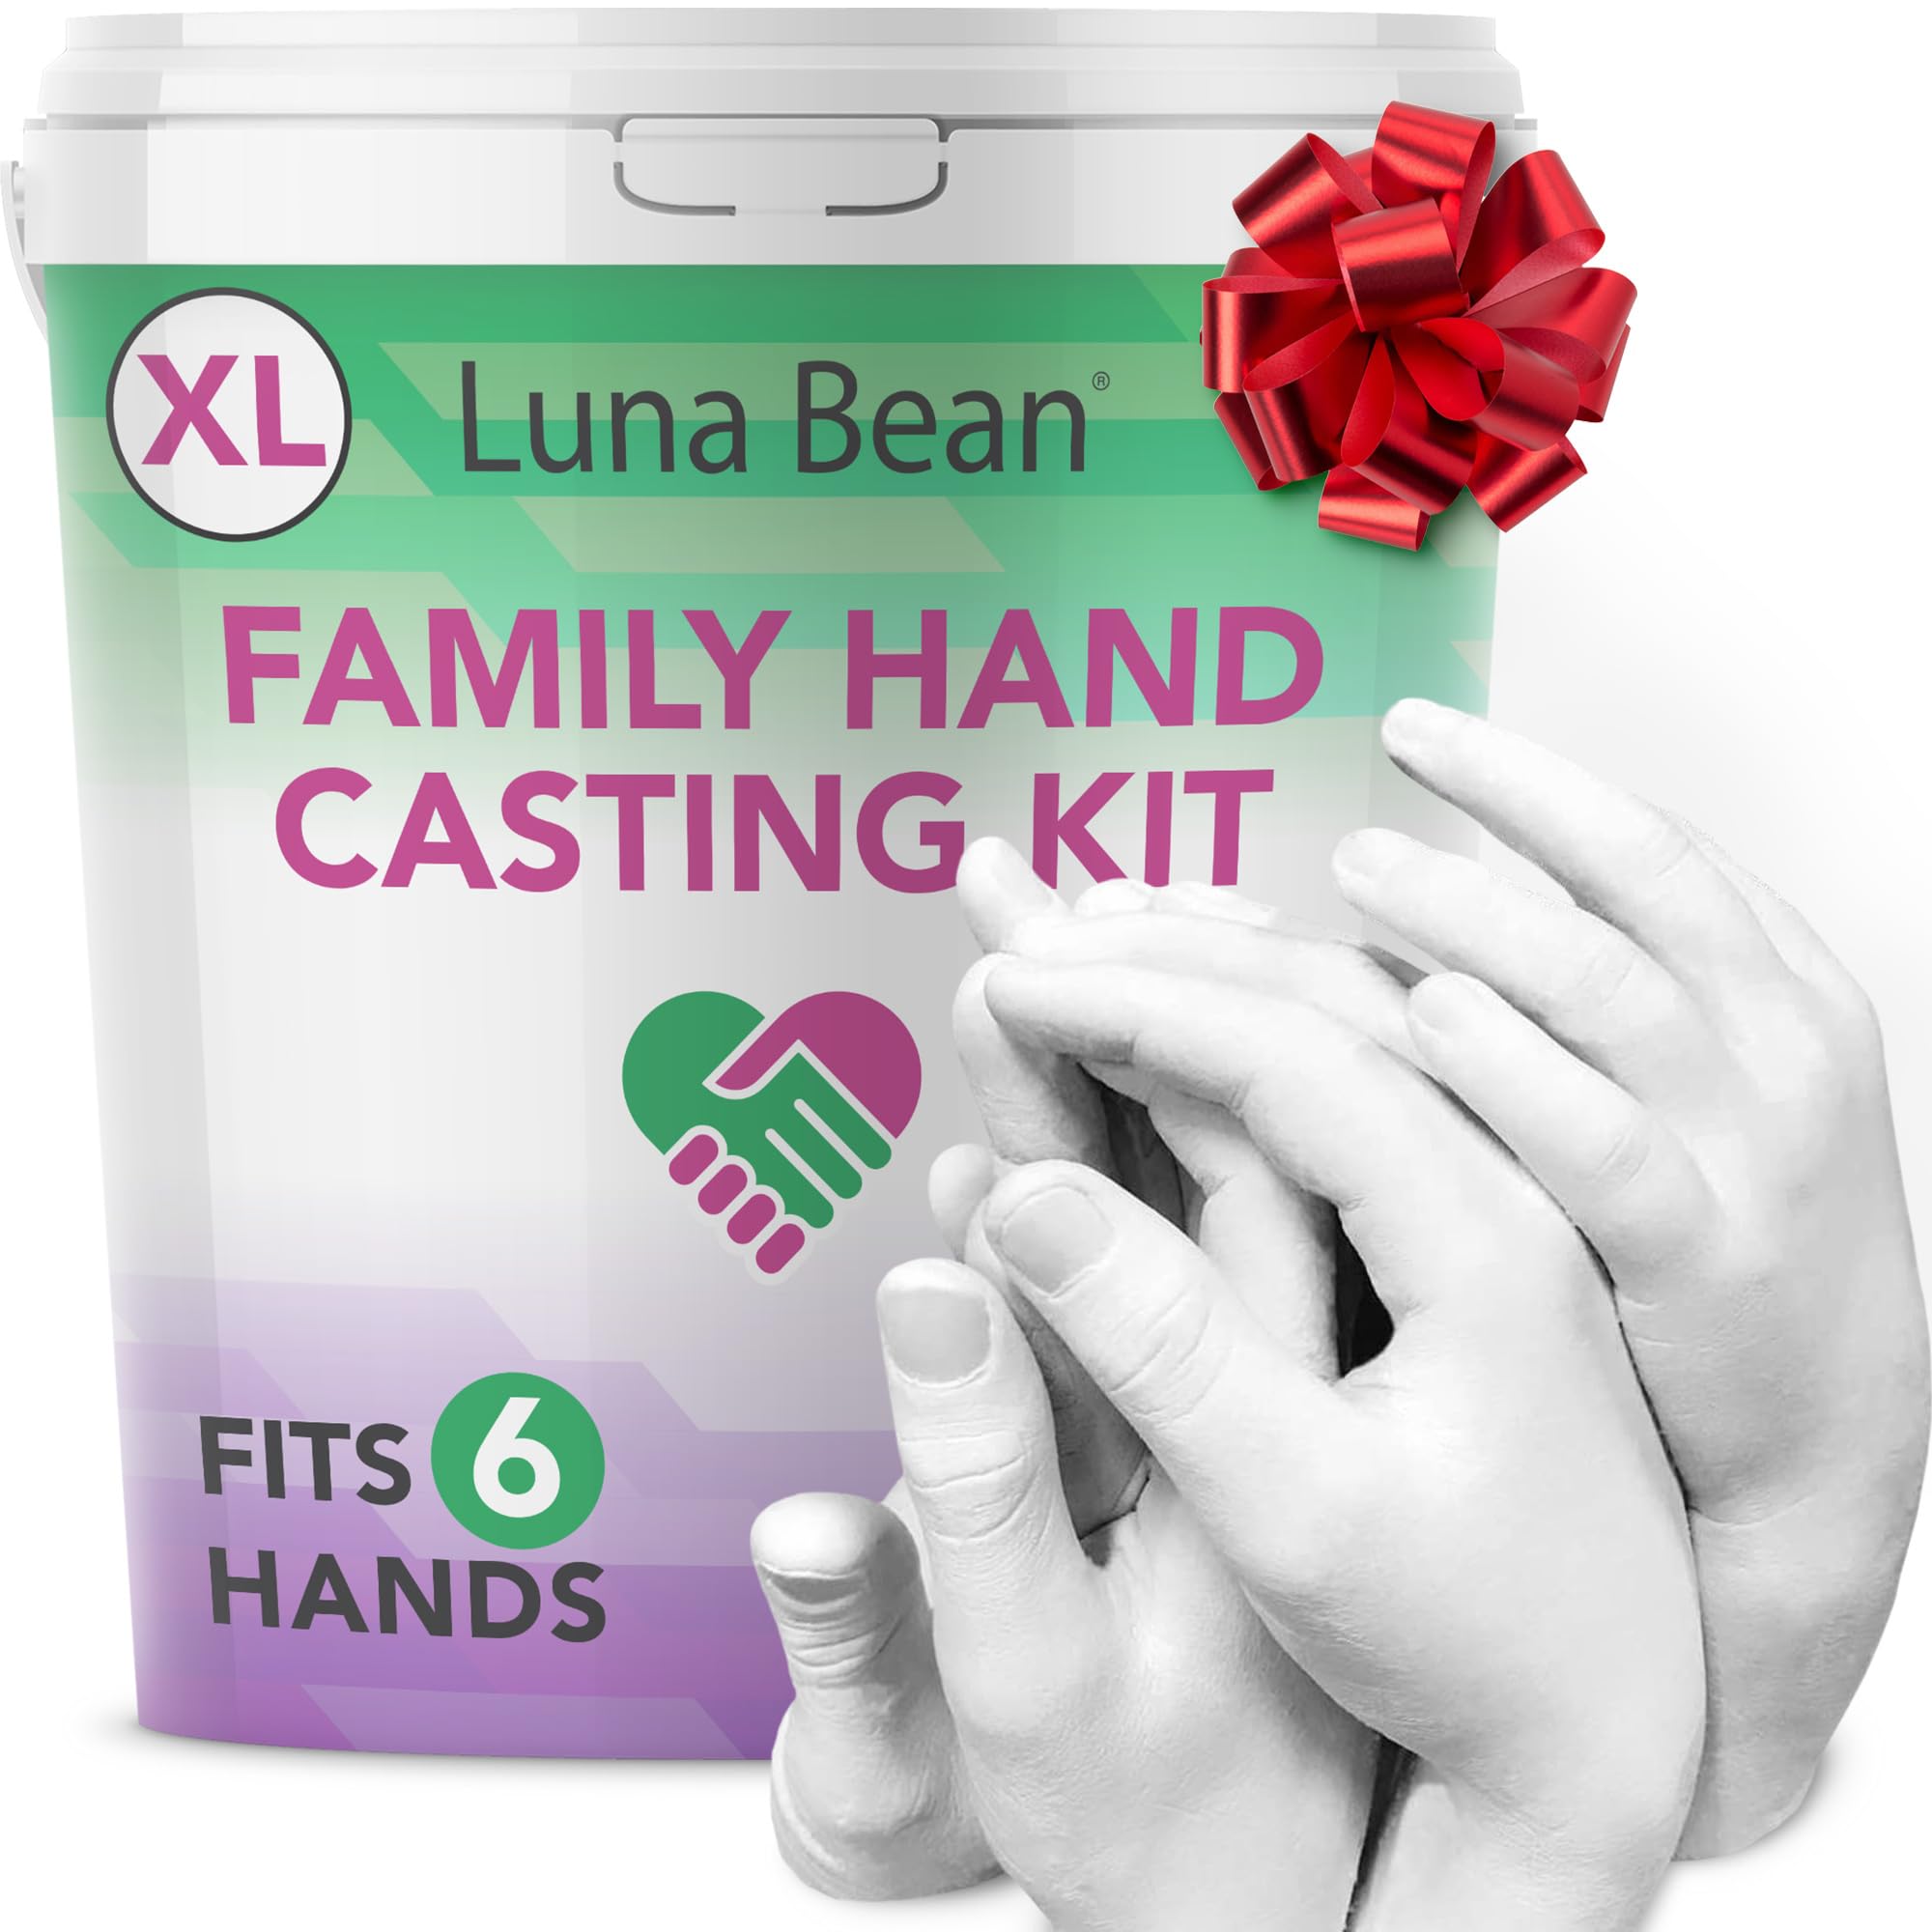 Luna Bean Keepsake Hands Casting Kit | DIY Plaster Statue Casting Kit |  Hand Holding Craft for Couples, Adult & Child, Wedding, Friends, Anniversary